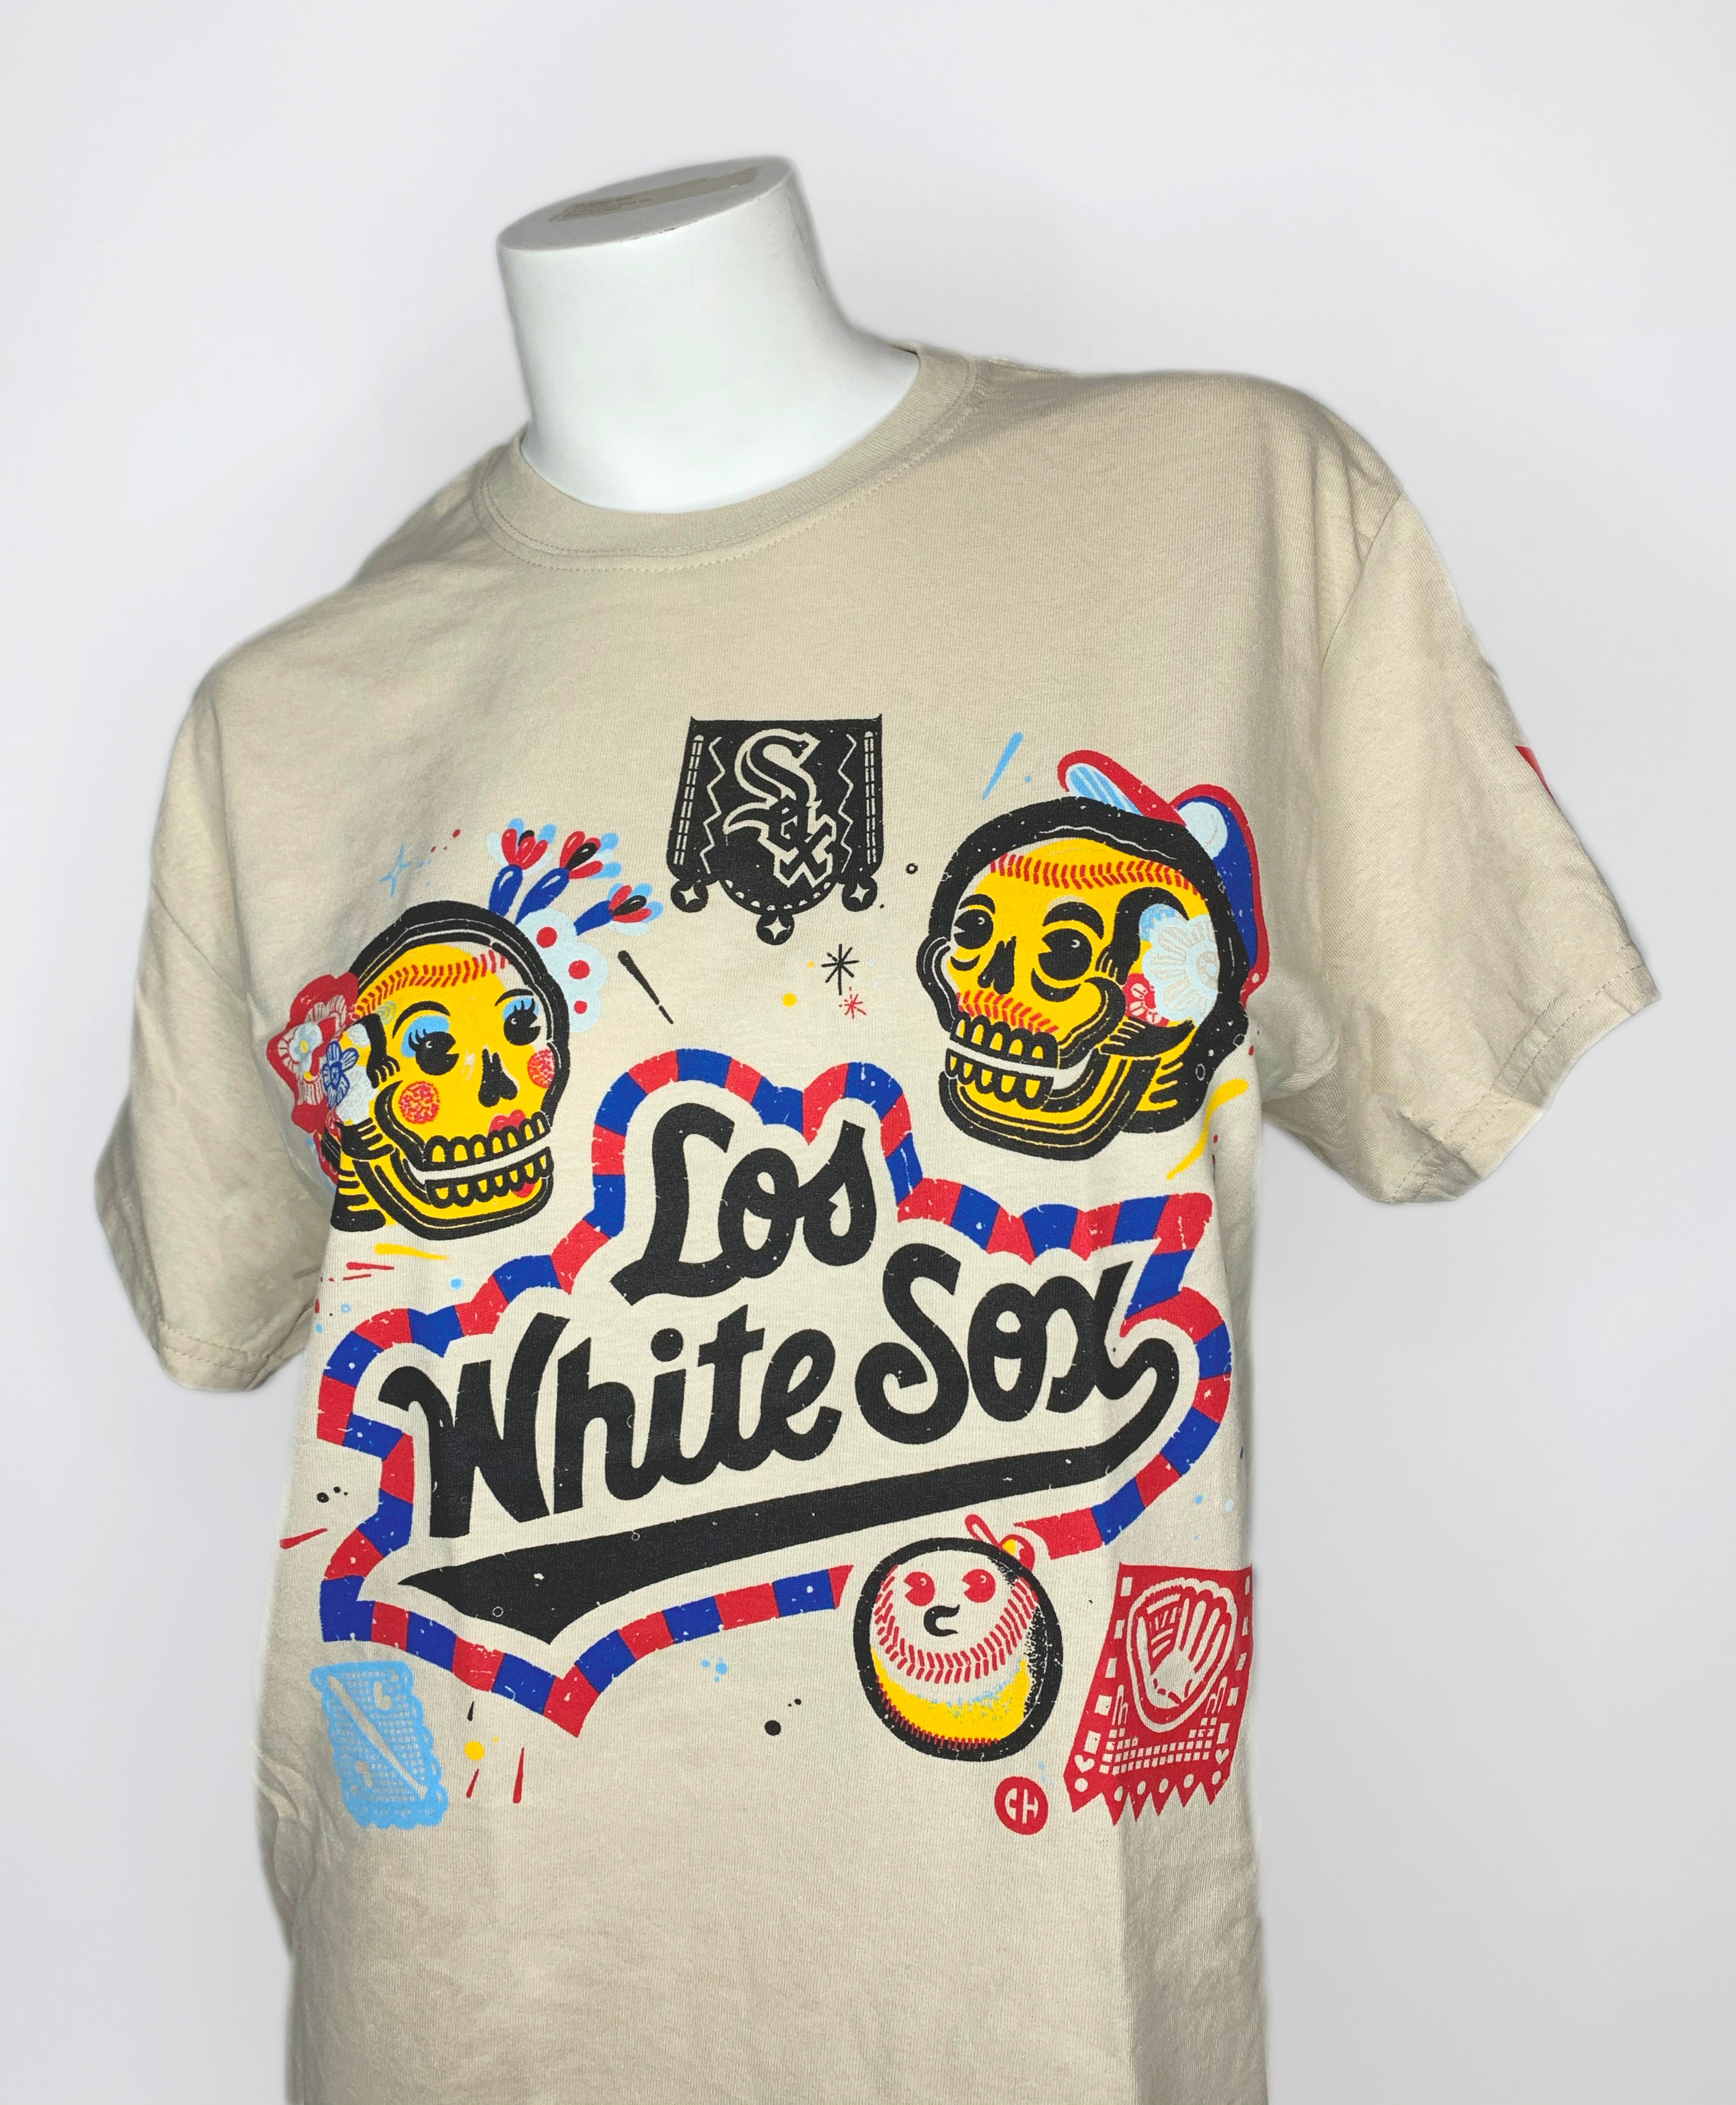 "Los White Sox" Official White Sox T-Shirt by CHema Skandal!